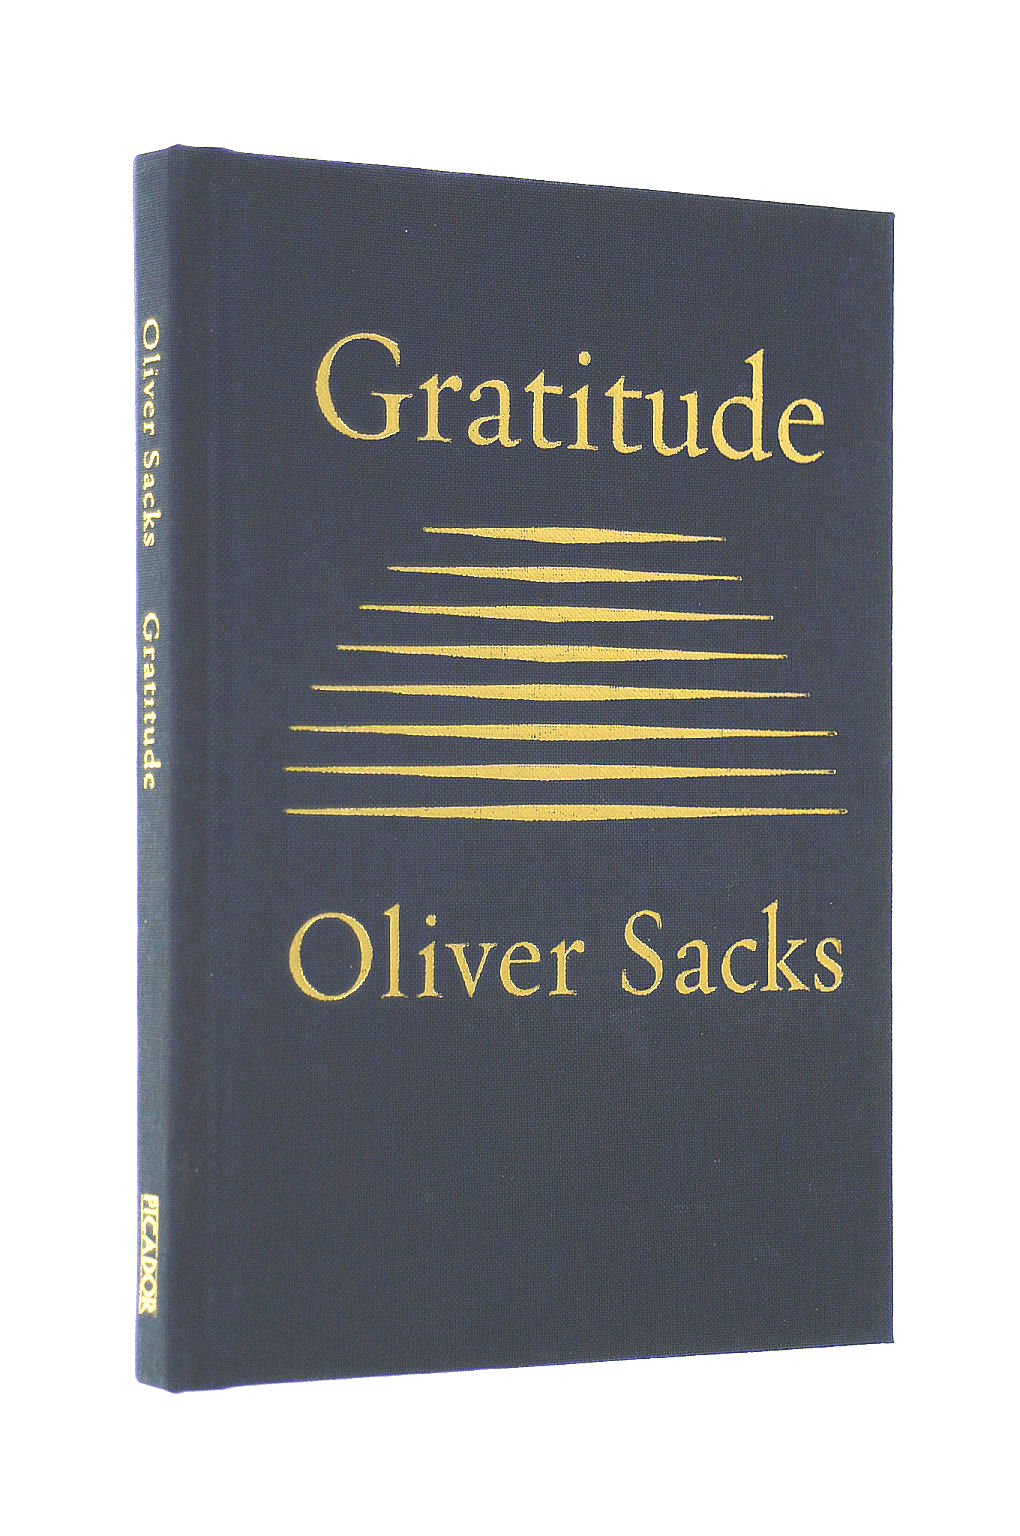 book gratitude by oliver sacks